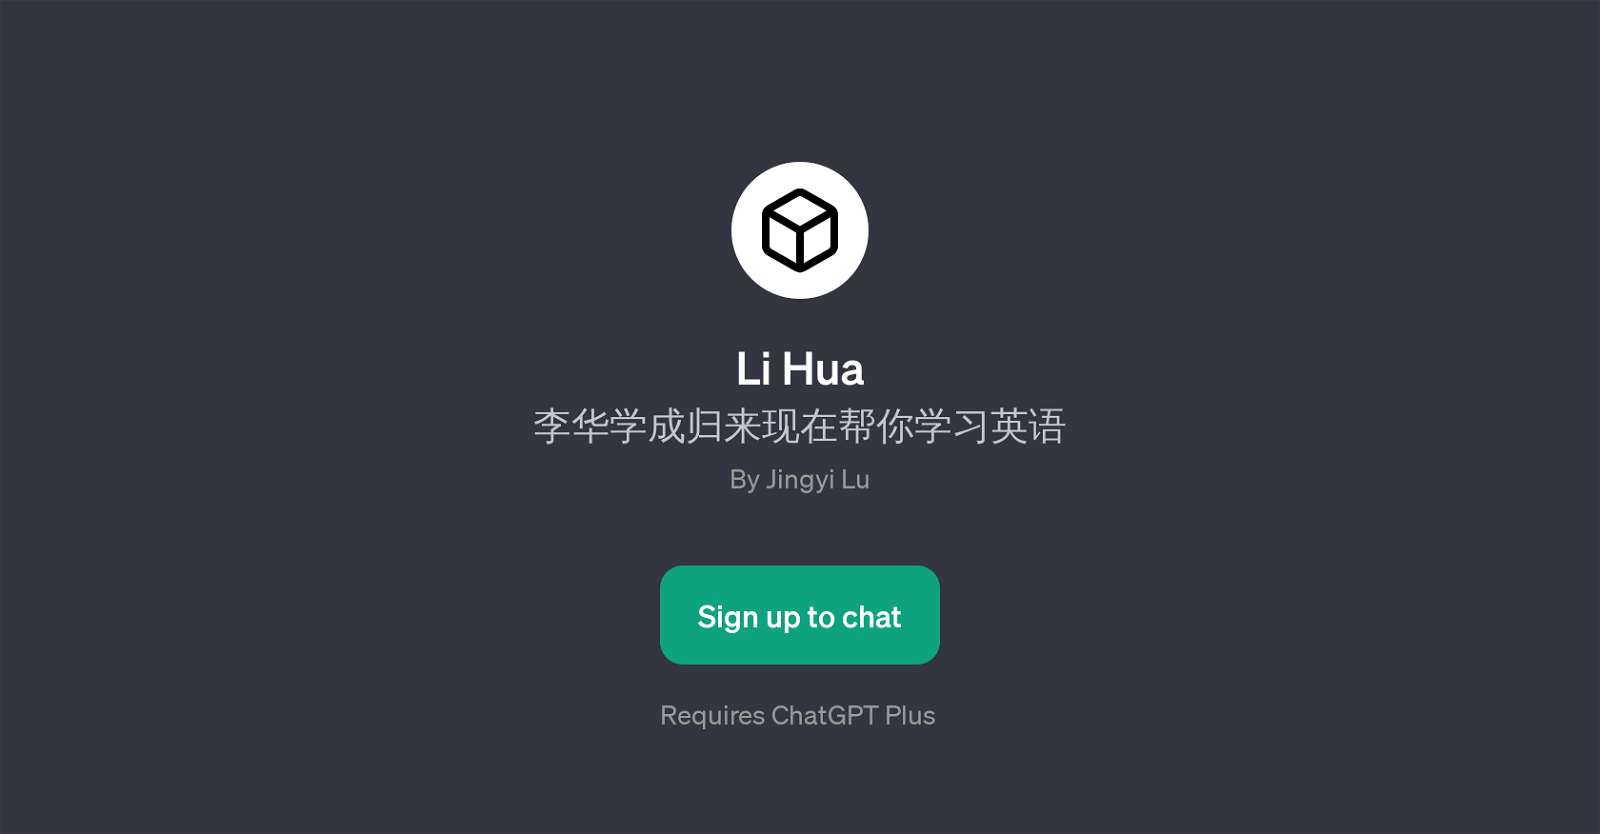 Li Hua website